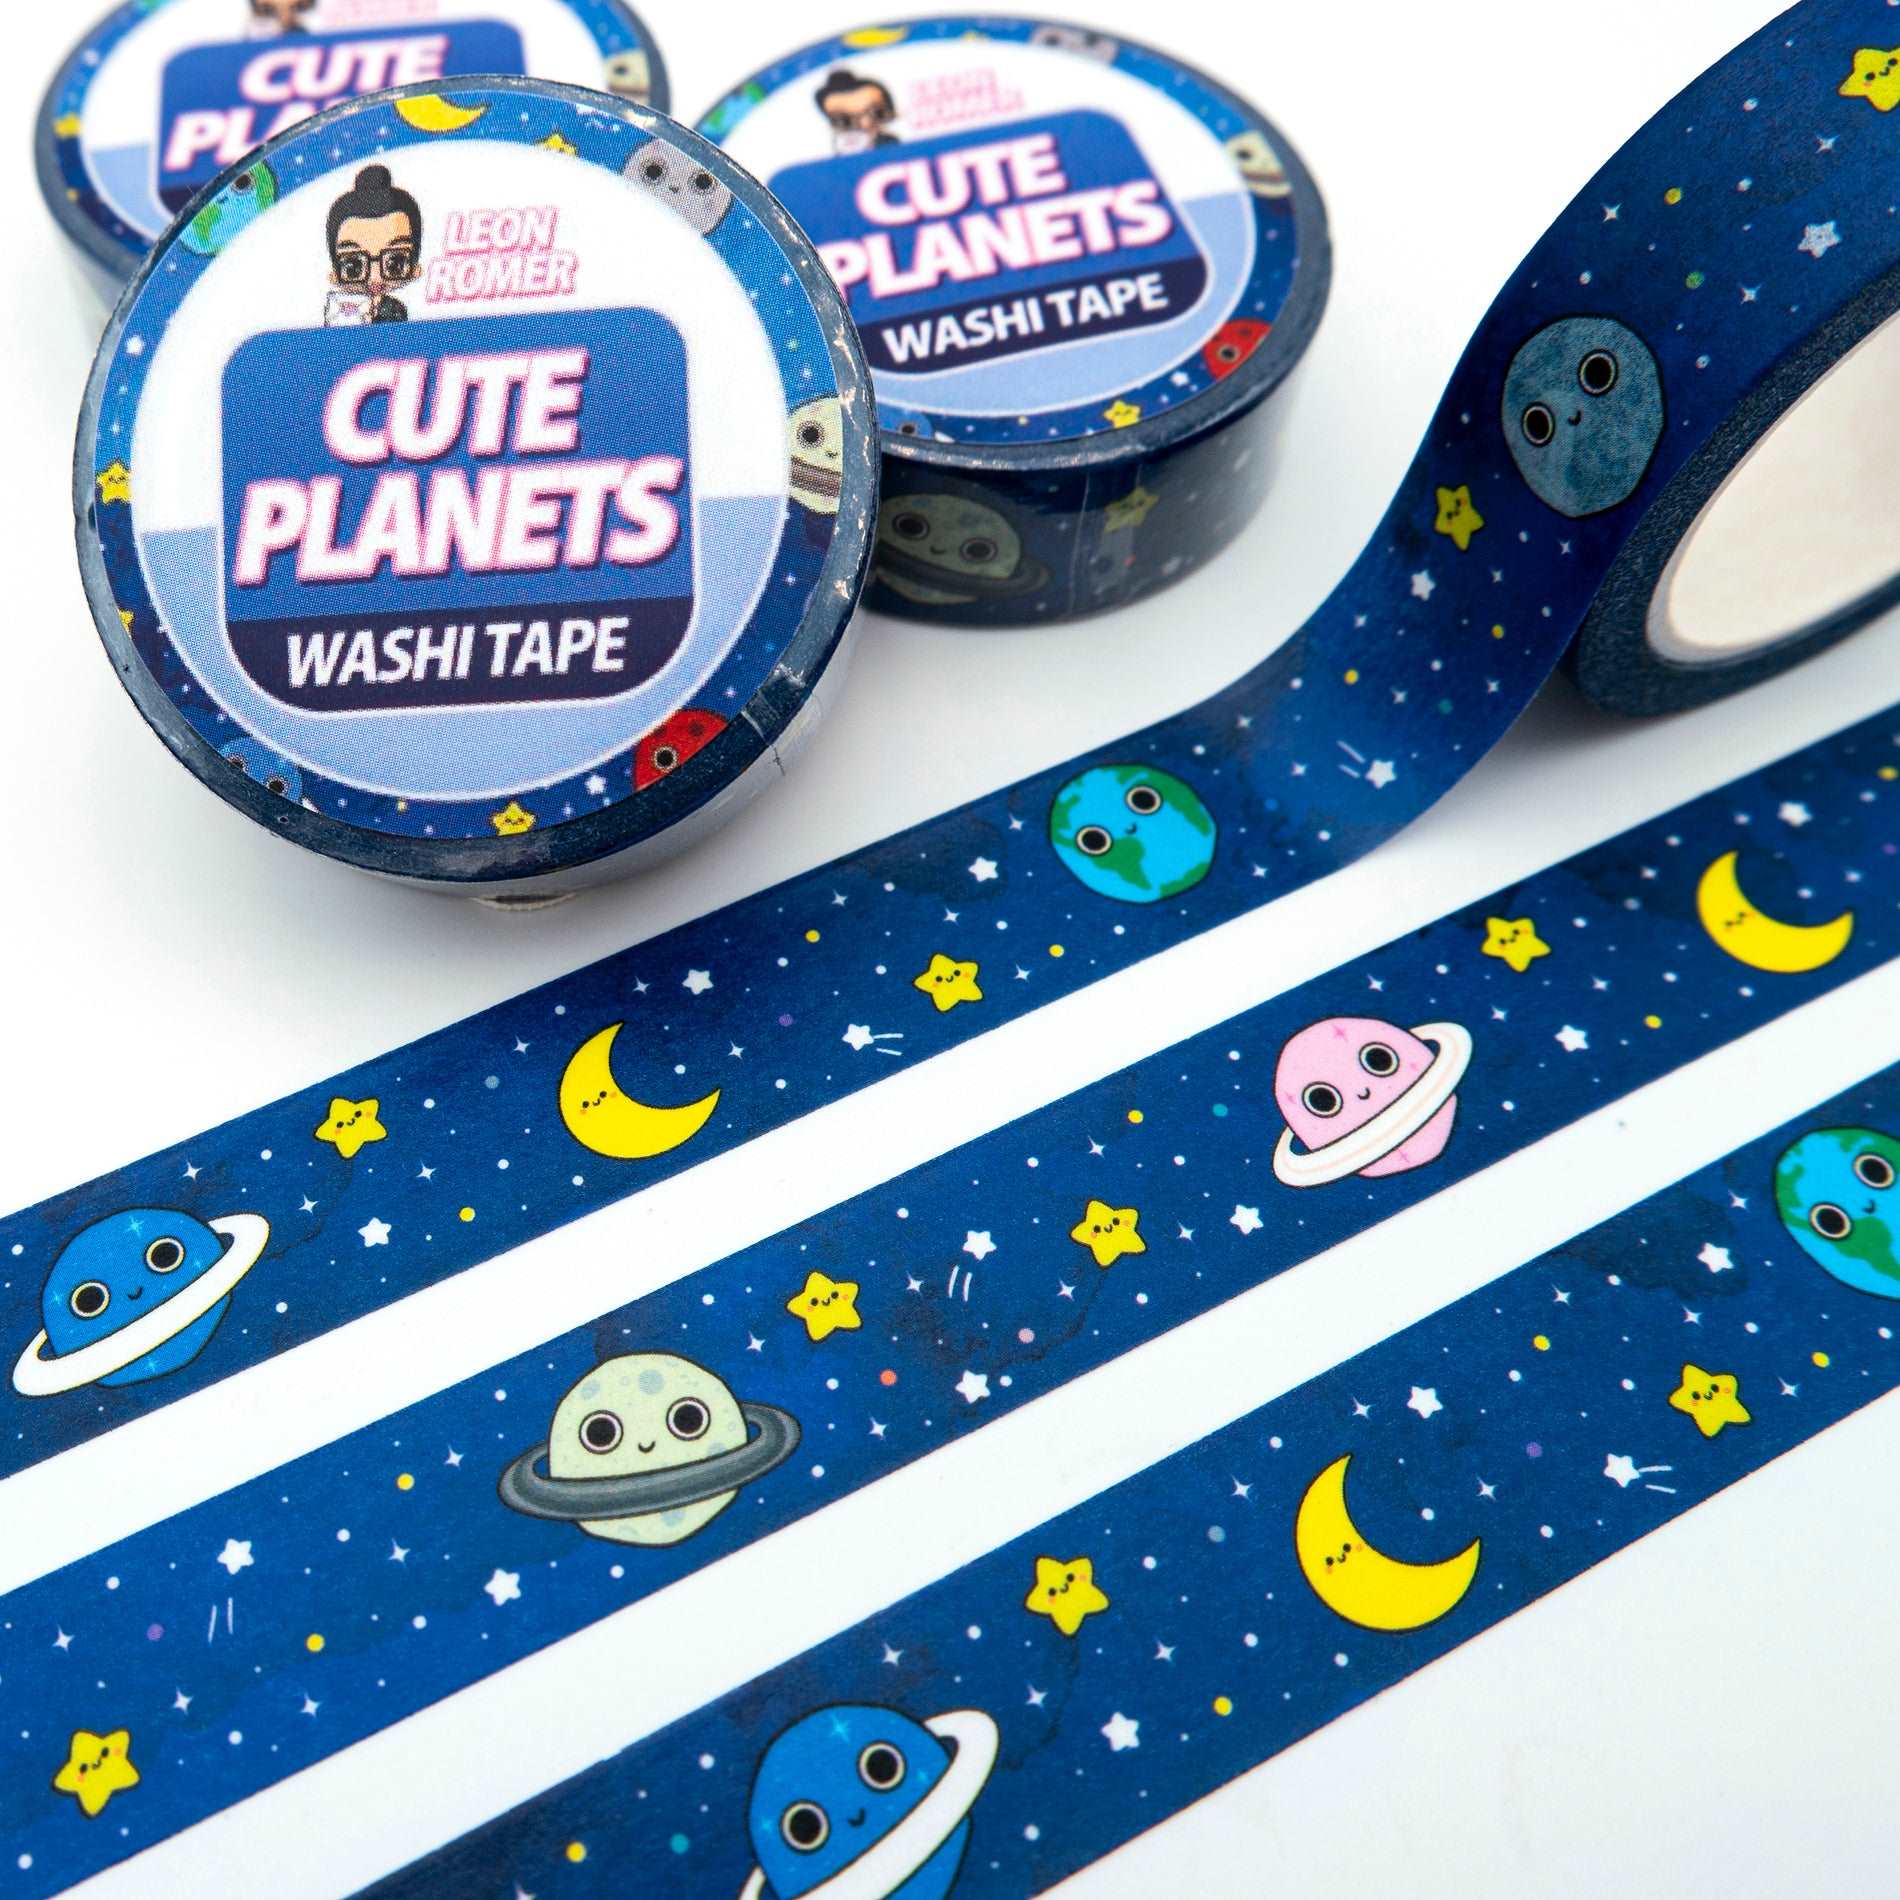 Cute Planets Washi Tape - Outer space washi Tape - Stars Washi